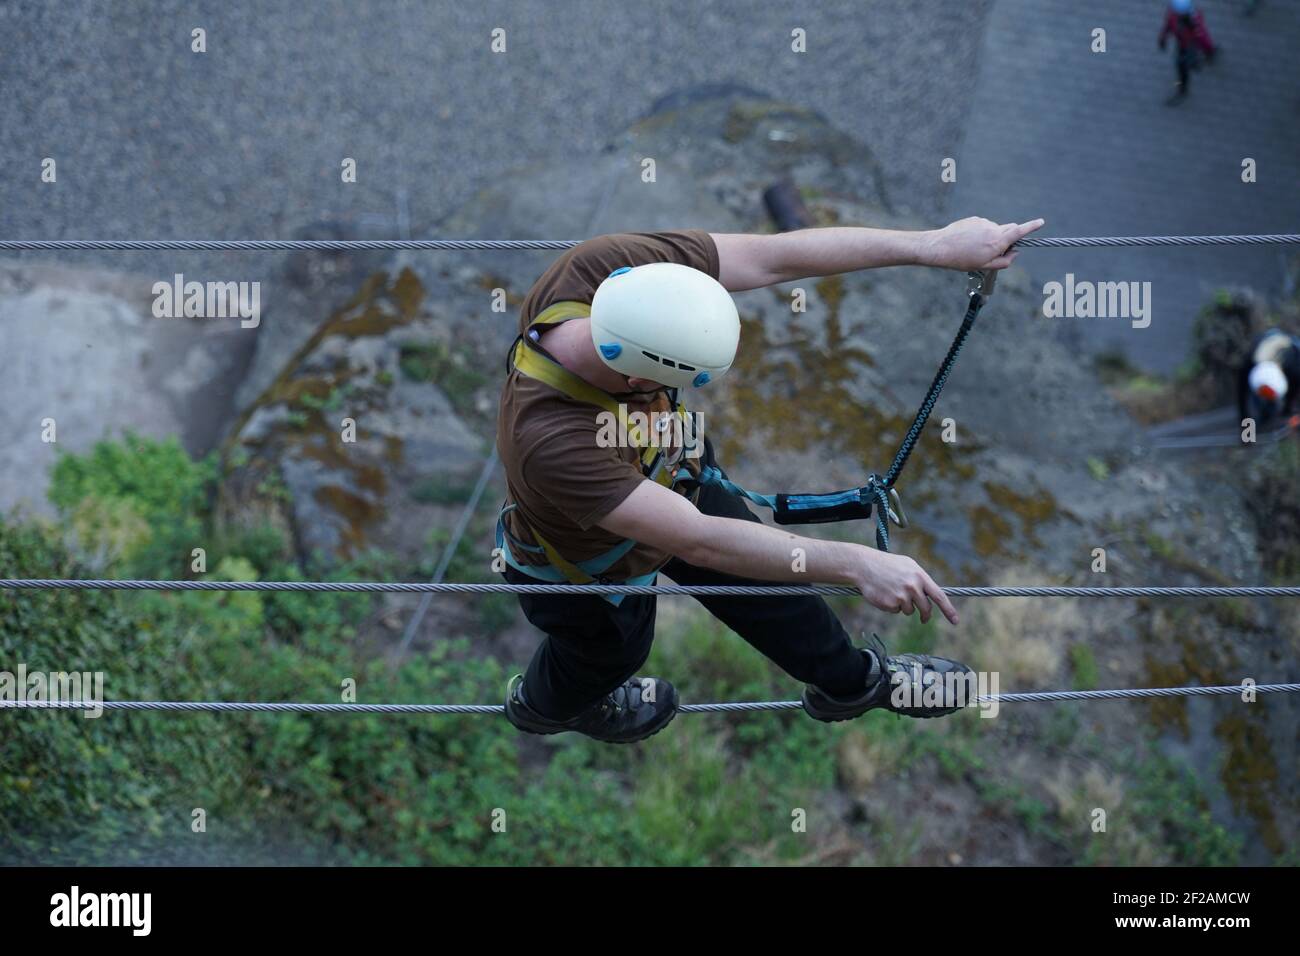 Single man climber walking on rope bridge at via ferrata mountain route  high above ground, Shepherd's Wall, Decin, Czech Republic Stock Photo -  Alamy